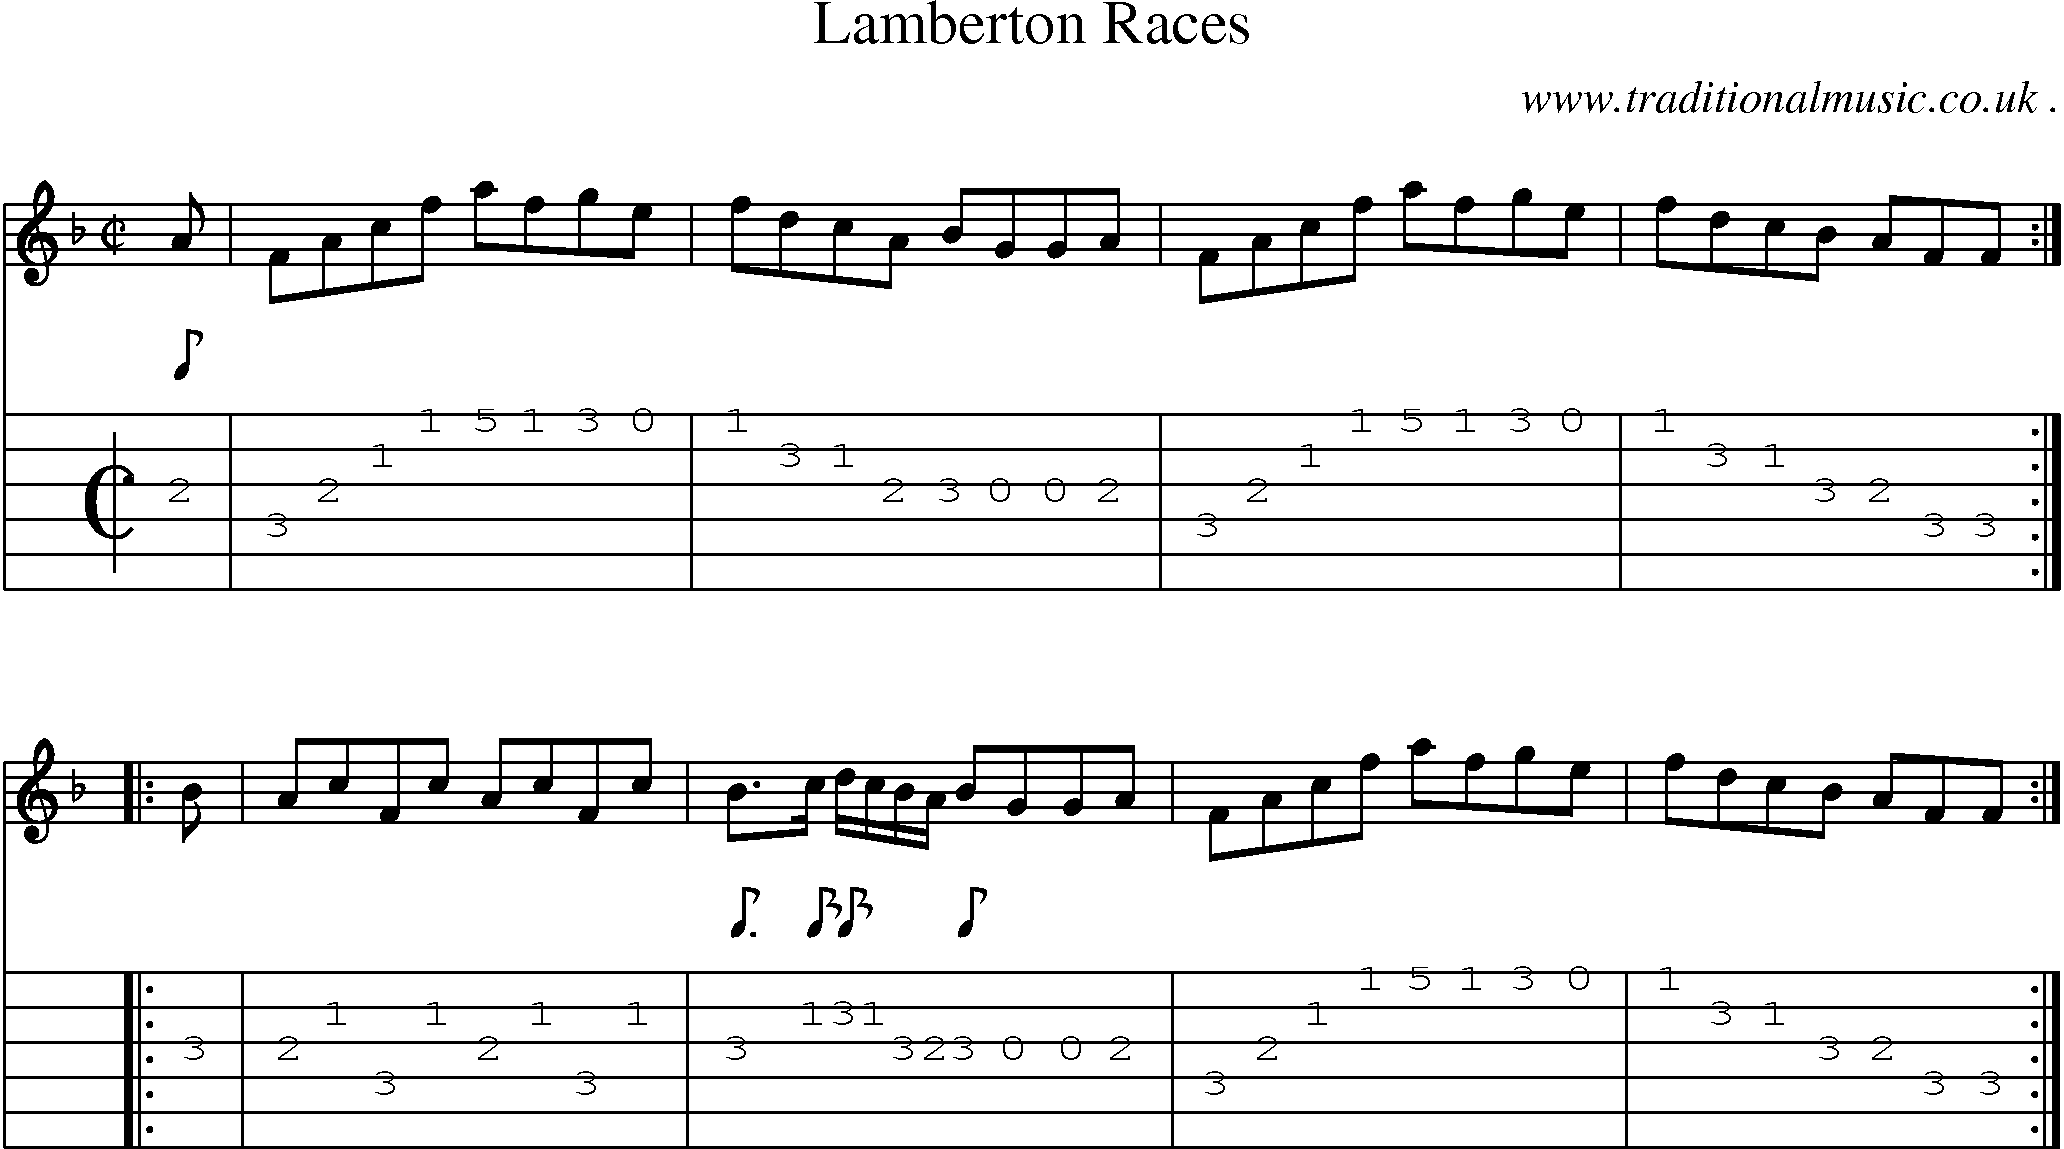 Sheet-music  score, Chords and Guitar Tabs for Lamberton Races